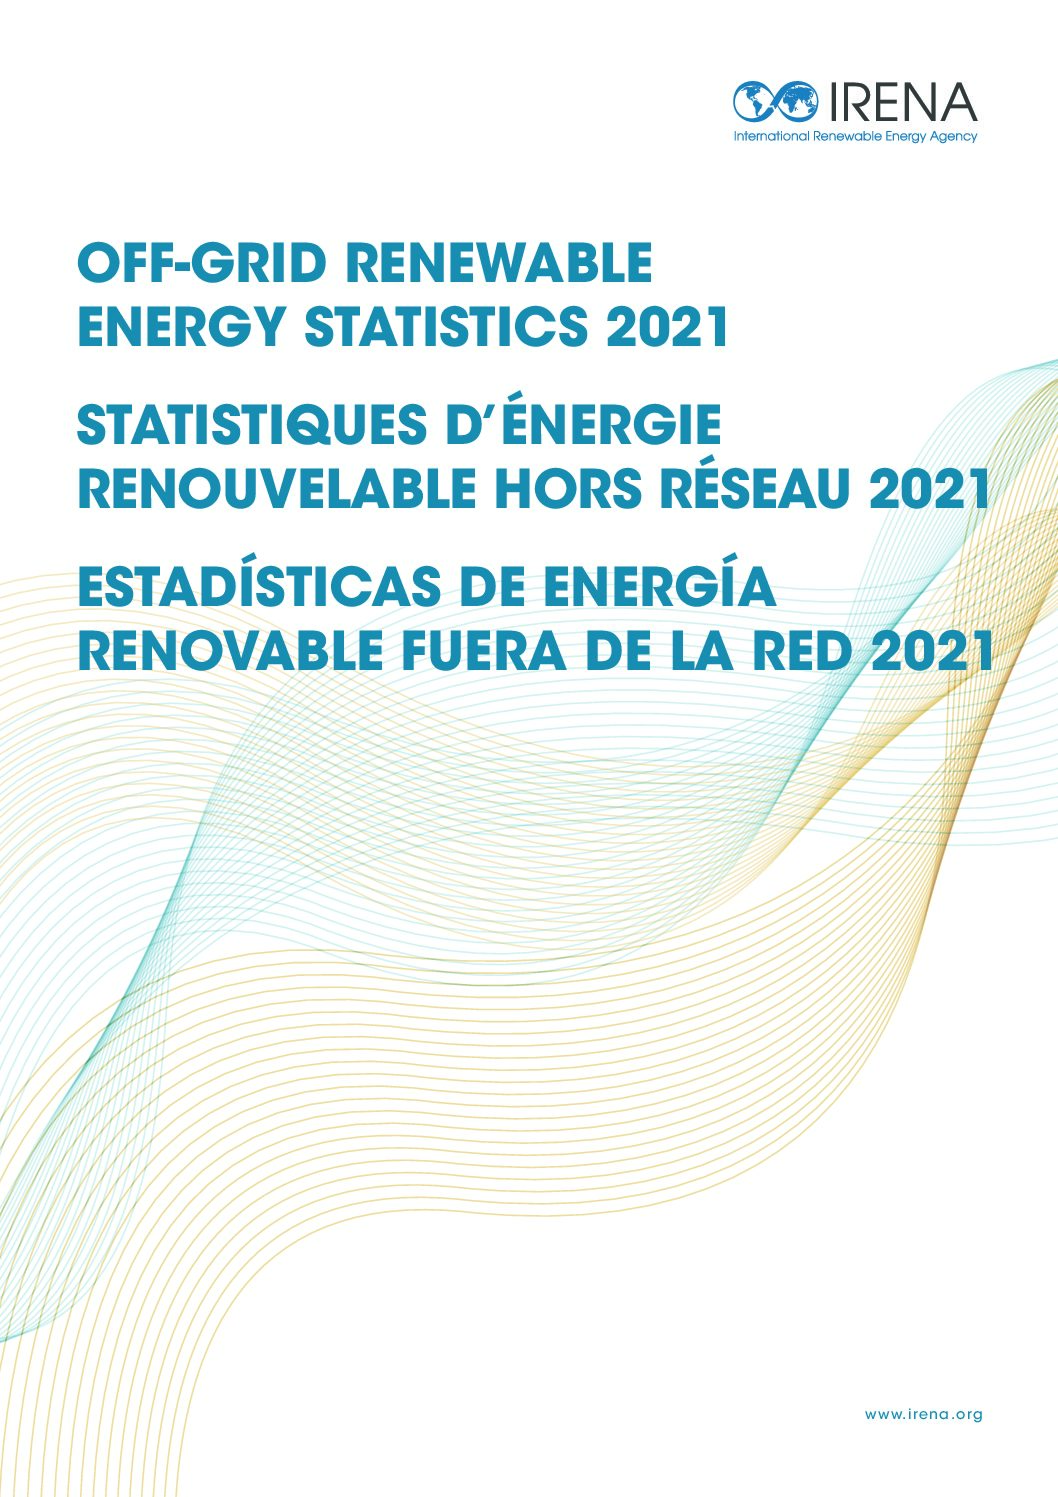 Off-grid renewable energy statistics 2021 – IRENA